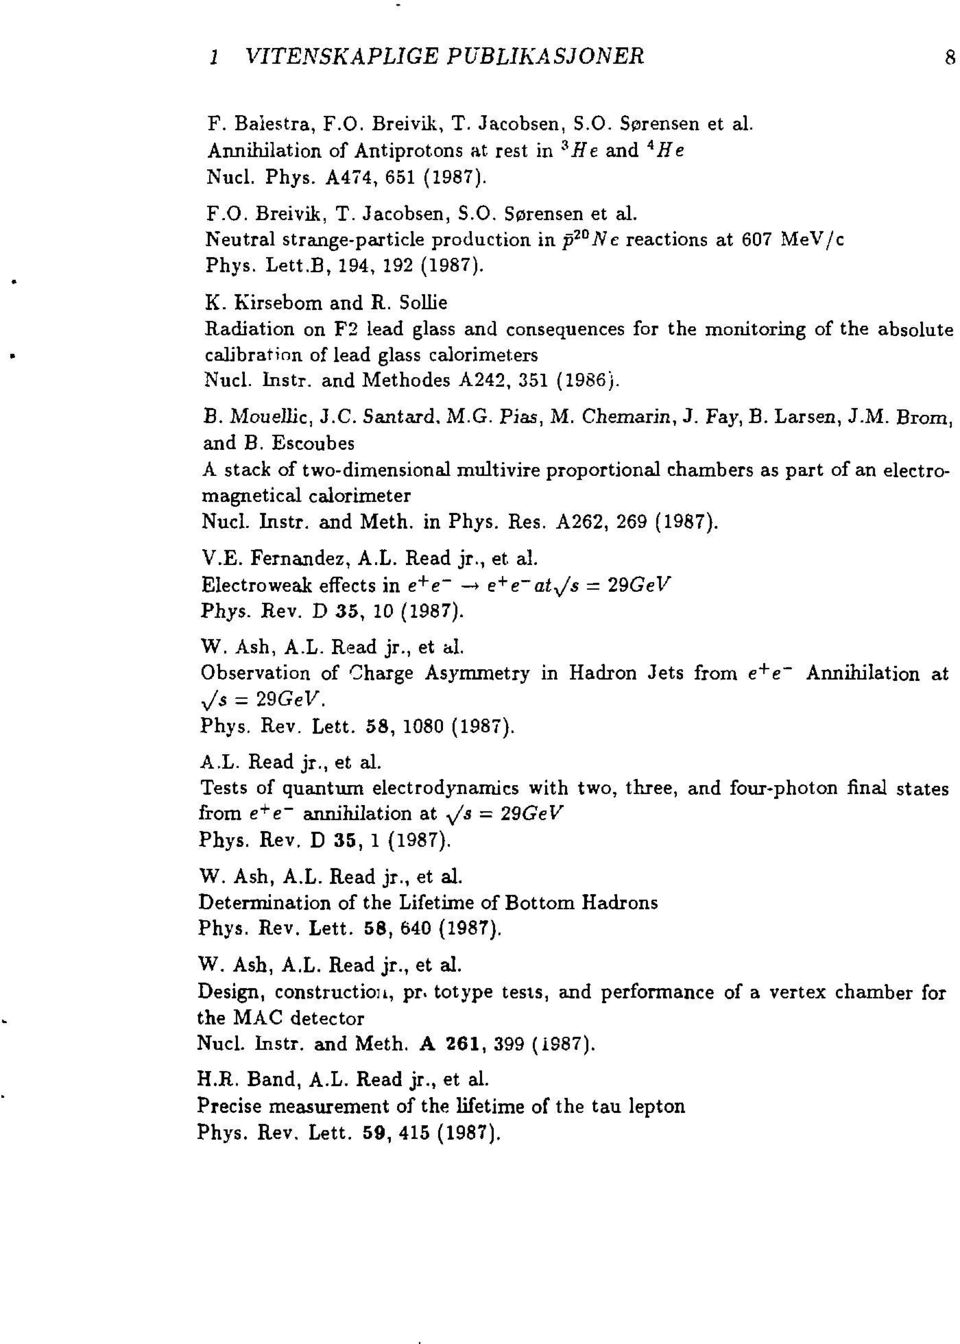 and Methodes A242, 351 (1986). B. Mouellic, J.C. Santard. M.G. Pias, M. Chemarin, J. Fay, B. Larsen, J.M. Brom, and B.